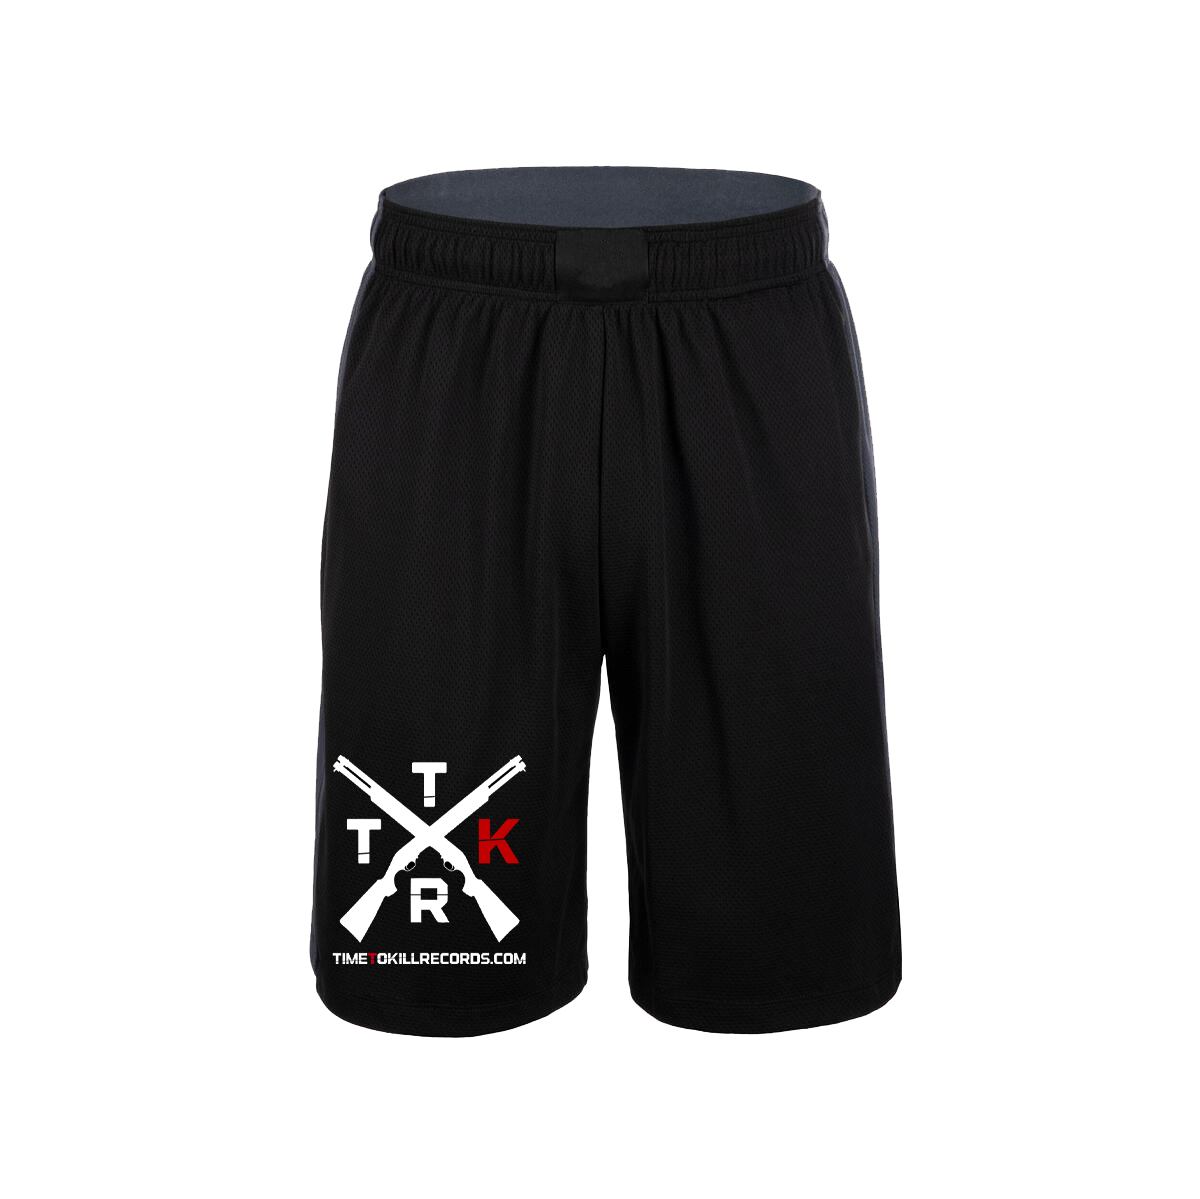 TTK Official "Fight" shorts